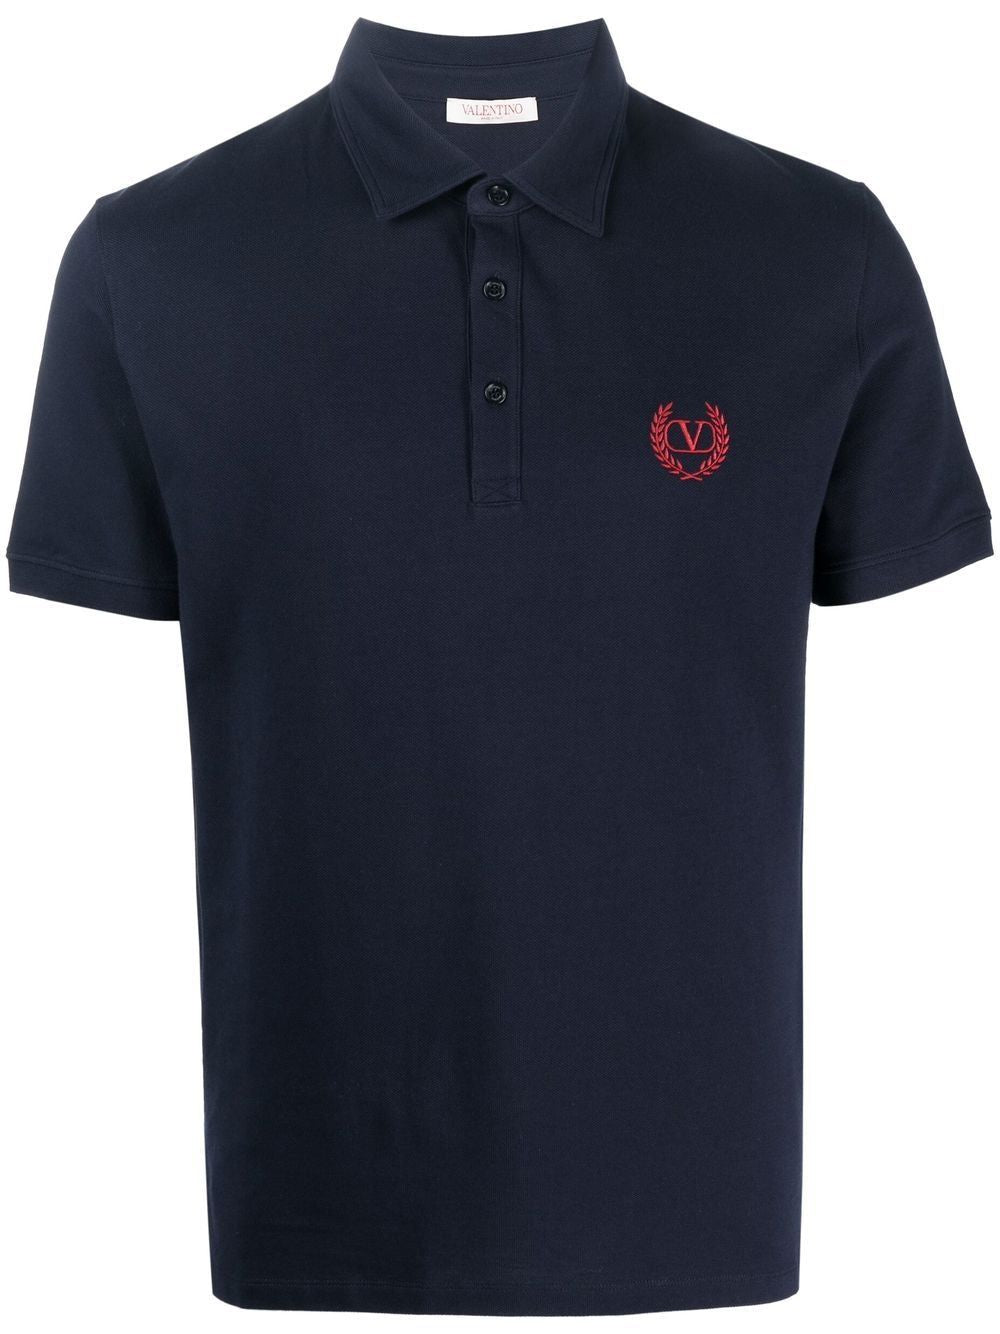 Blue Vロゴ刺繍Tシャツ - 男性用SS23衣料品